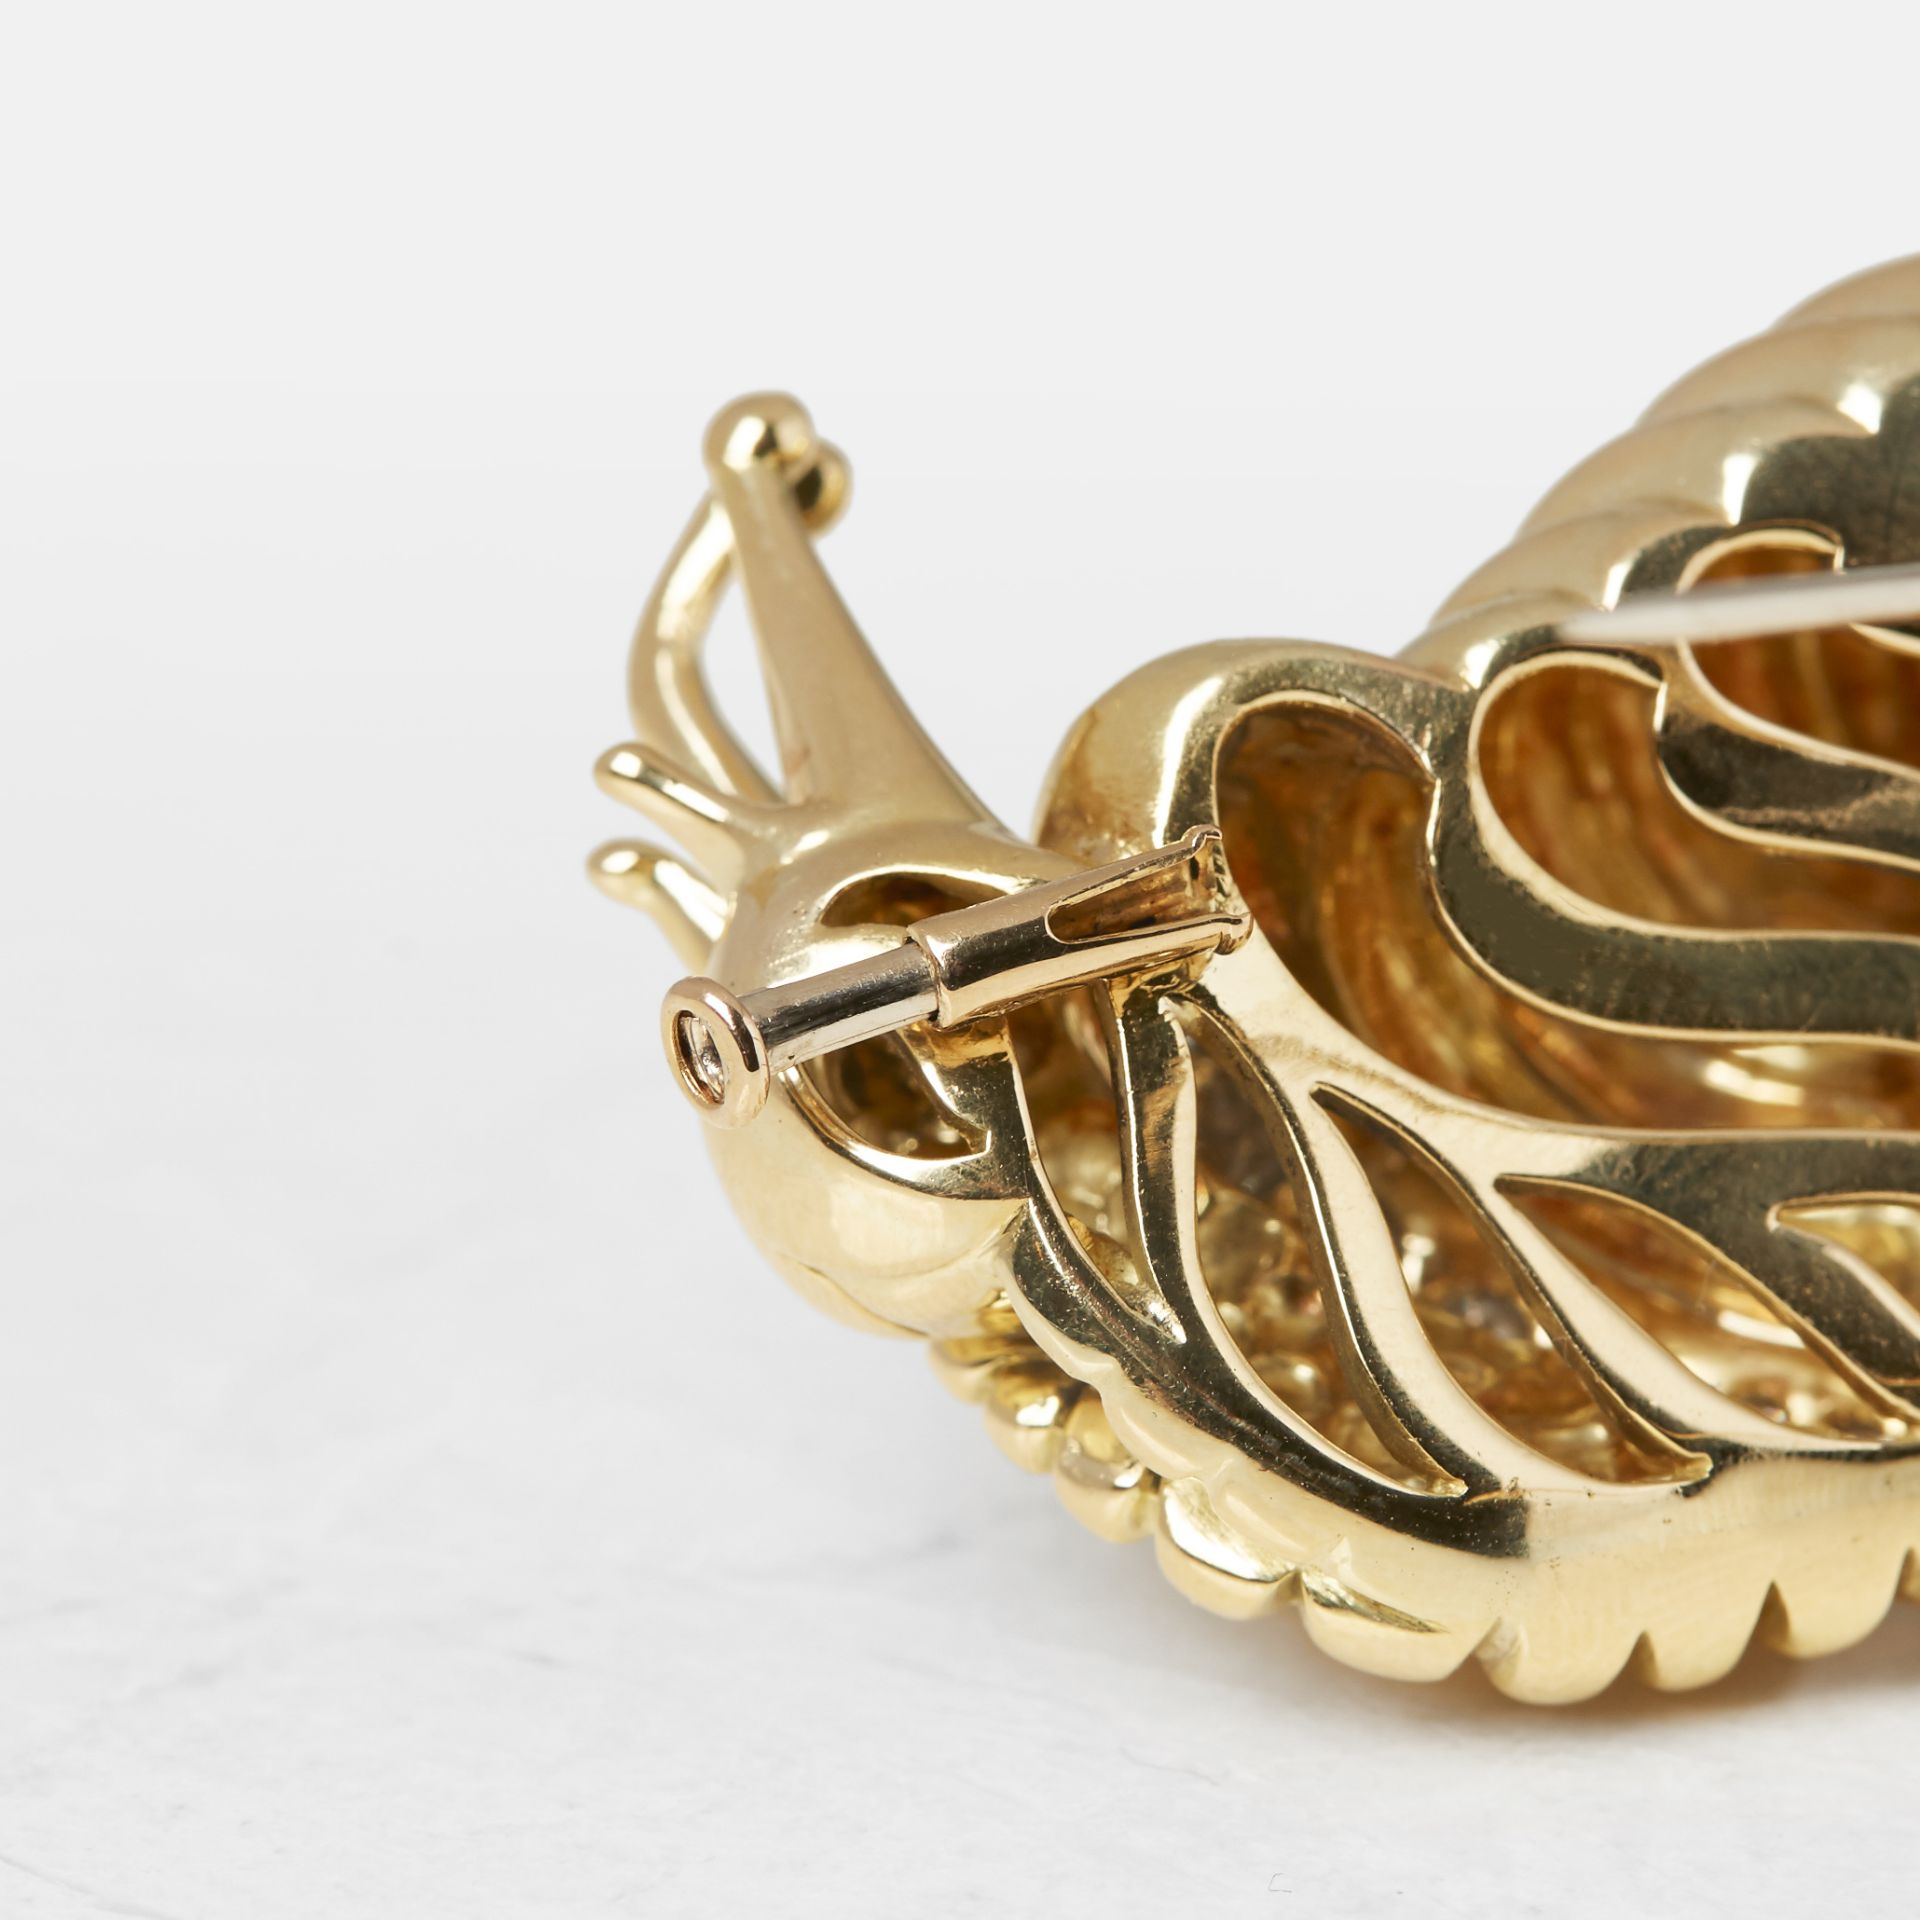 Rene Boivin 18k Yellow Gold Diamond Snail Brooch with Presentation Box - Image 8 of 19